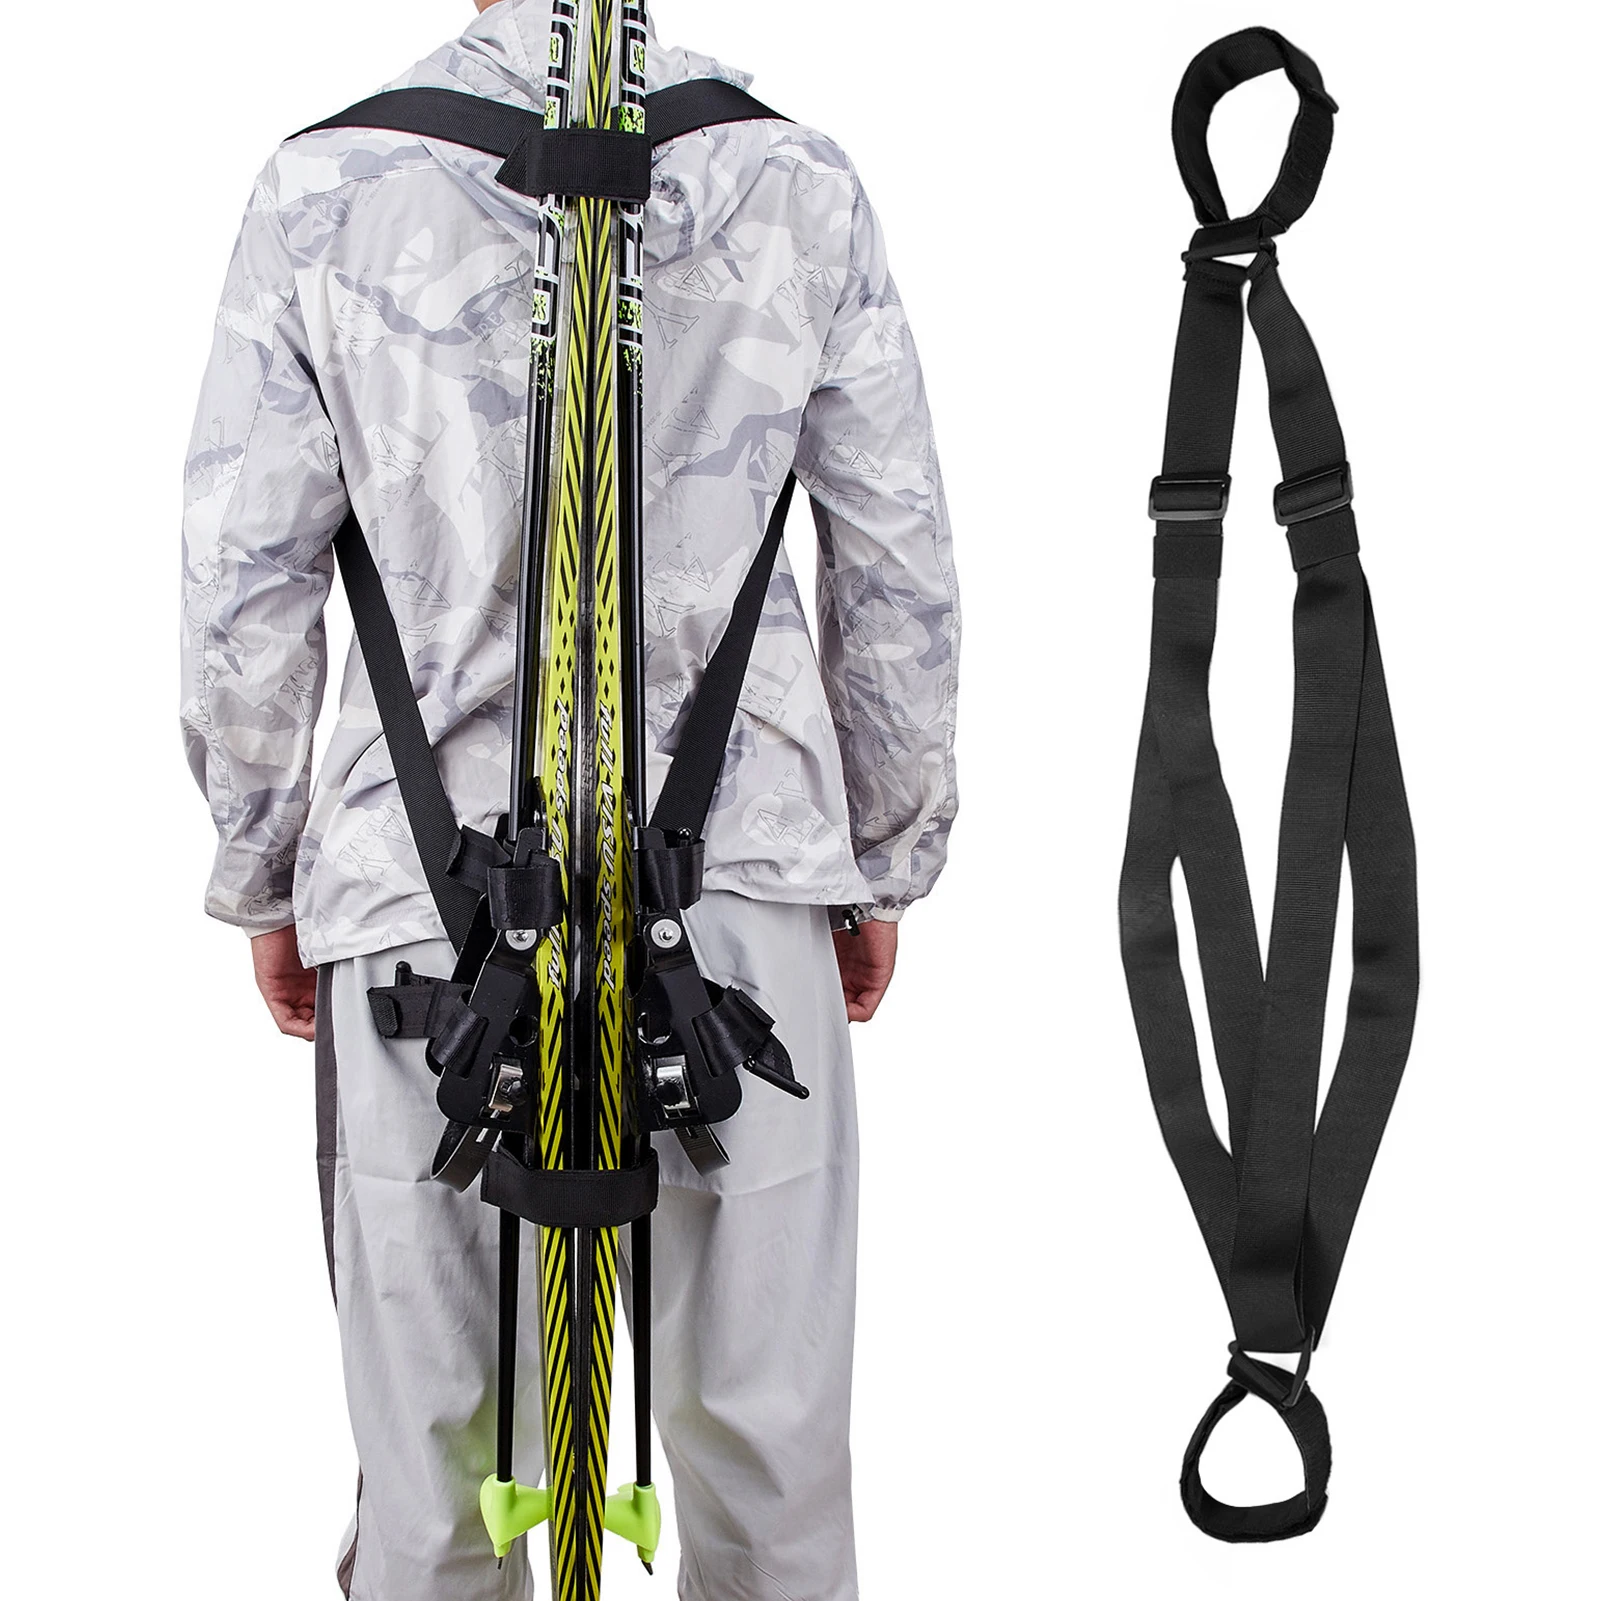 

Premium Ski Straps with Hoop&loop Adjustable Skiing Supplies Adjustable Length Prevent Back Pain Fits Regular/Large Skis gift